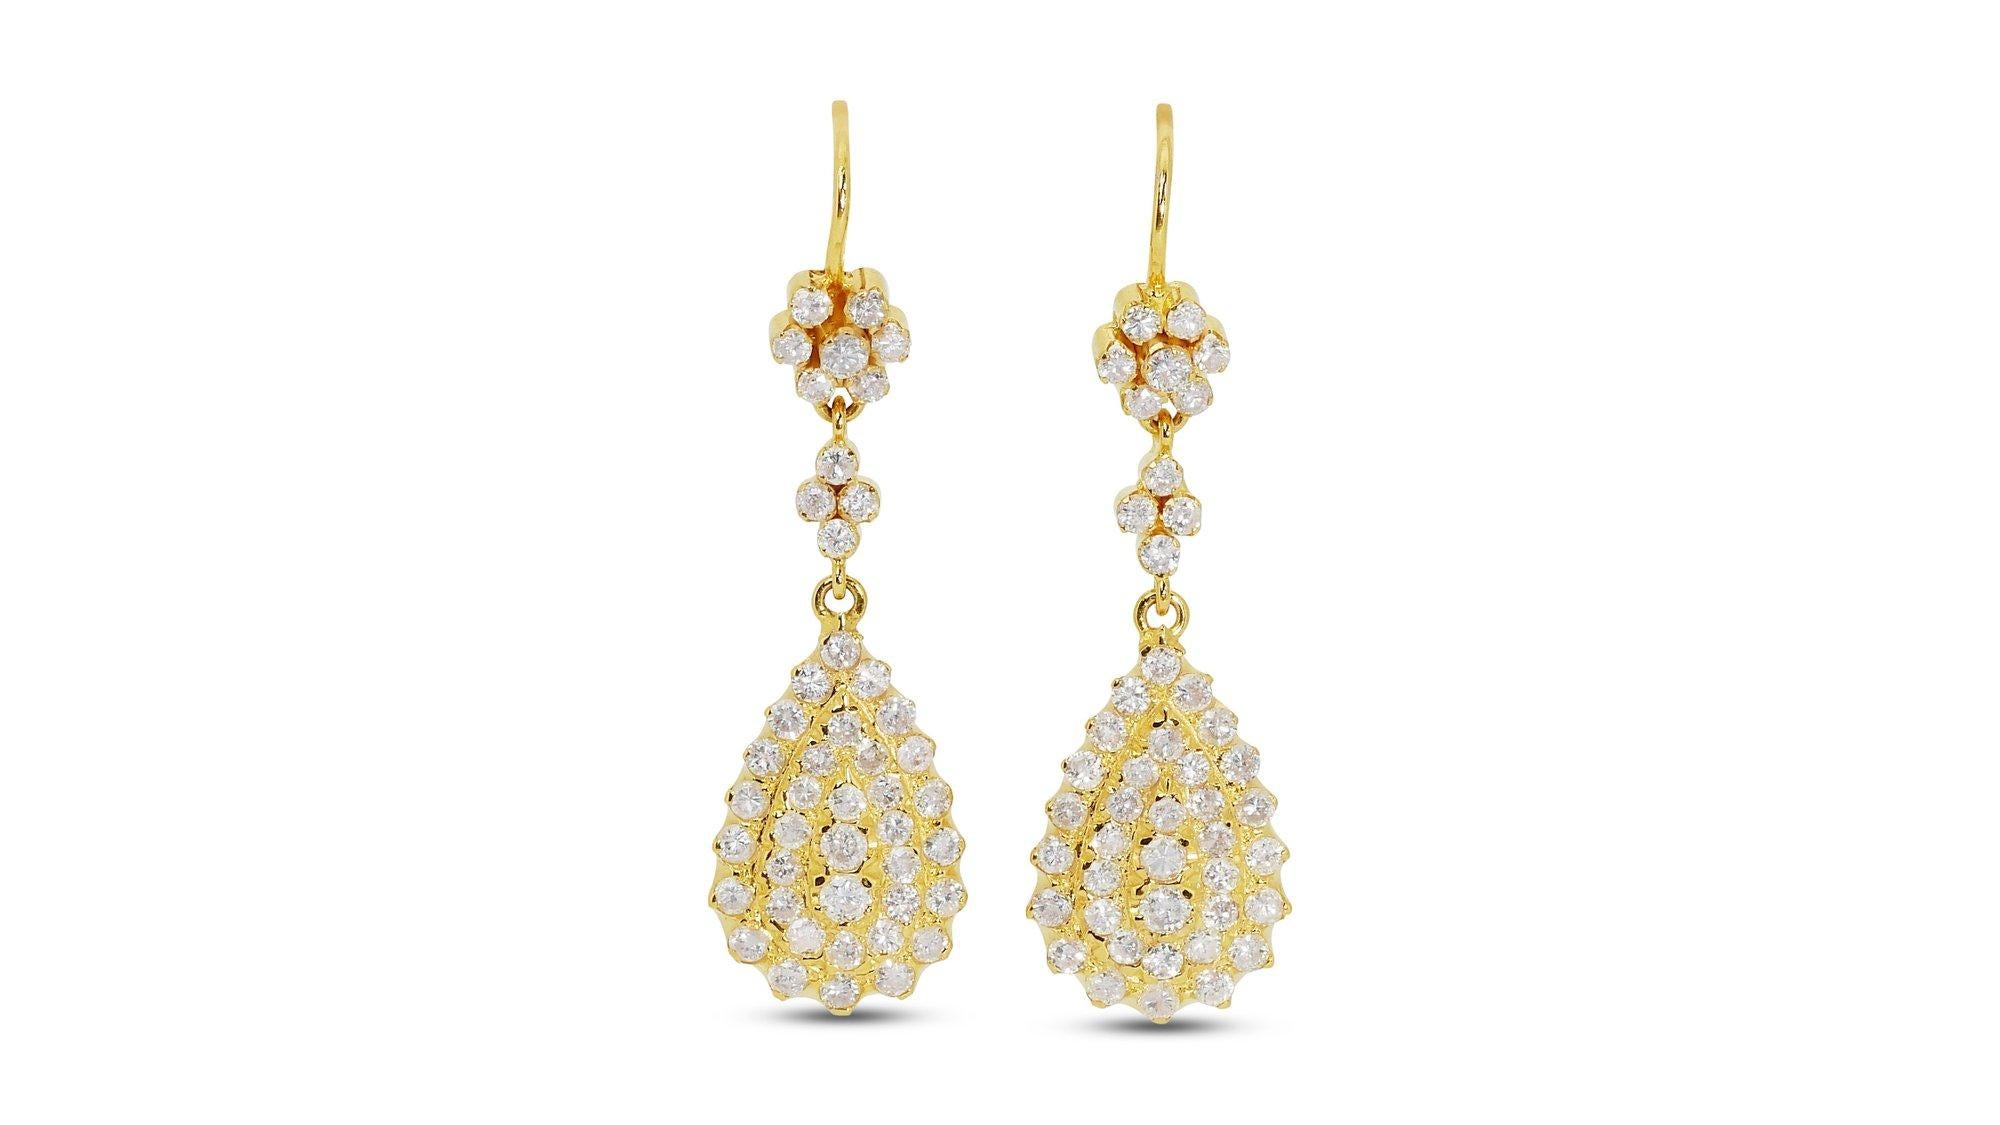 Marvelous 18k Yellow Gold Drop Earrings w/ 2ct Natural Diamonds IGI Certificate For Sale 1